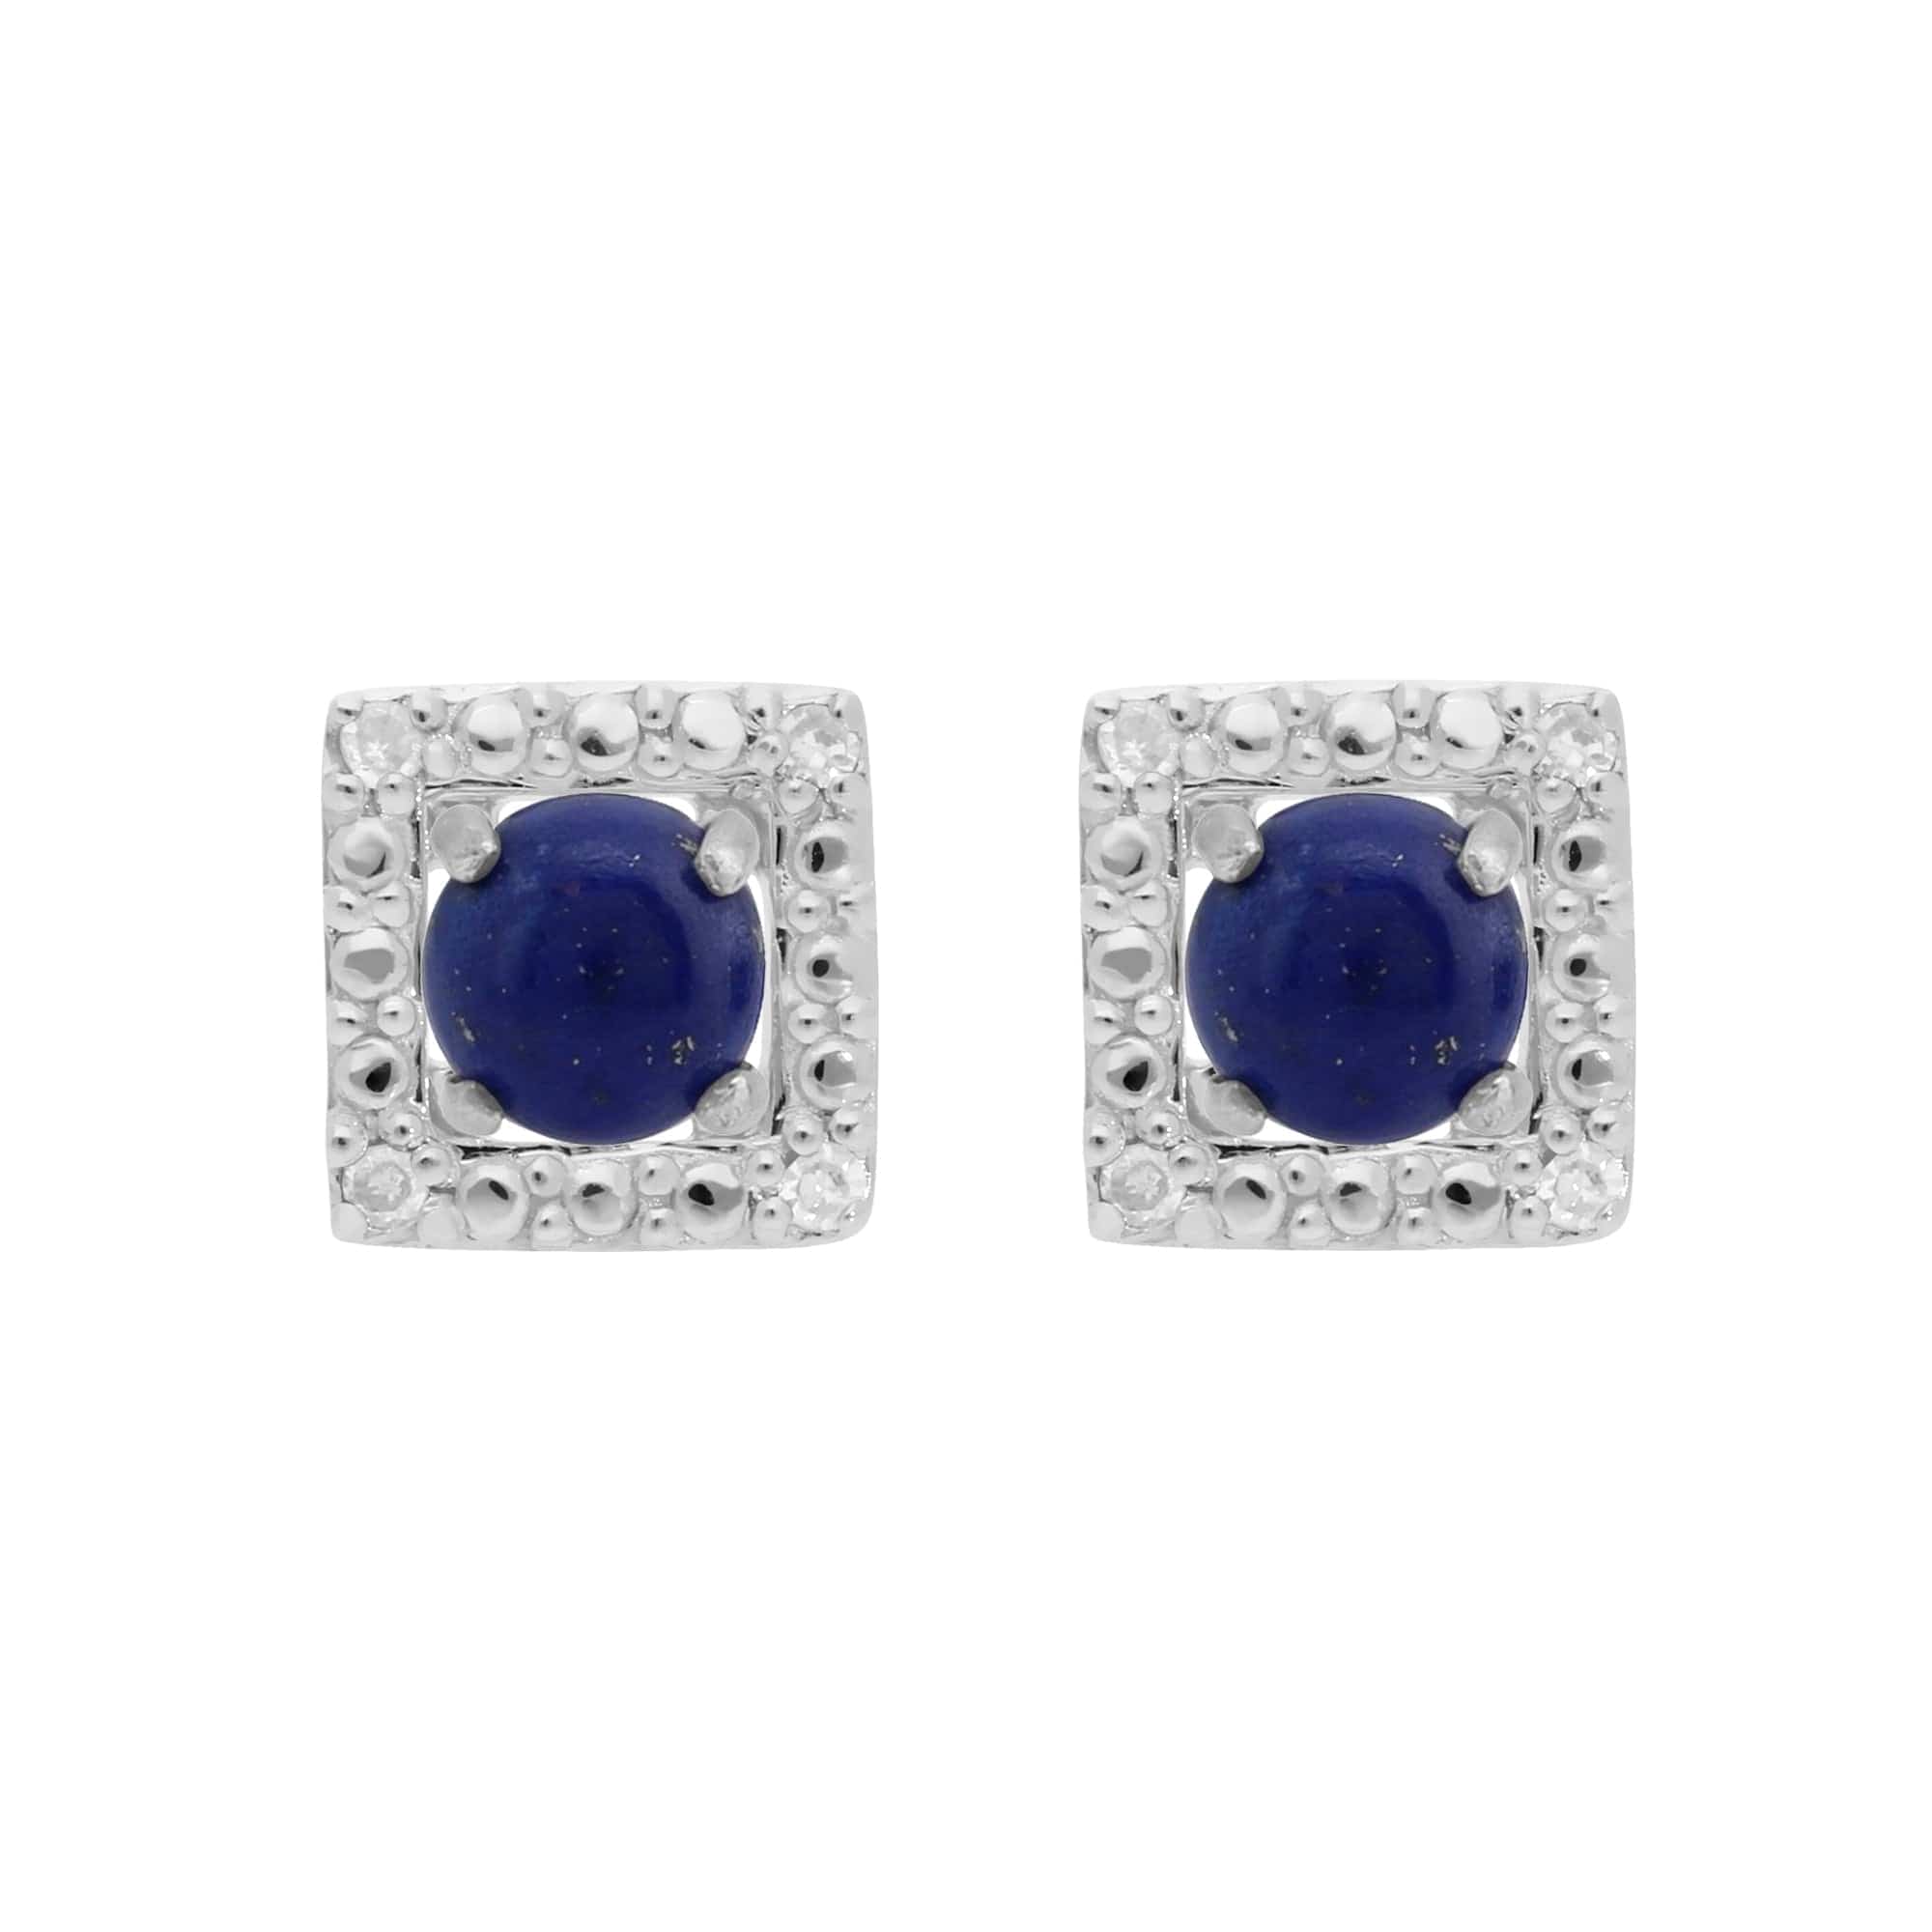 162E0071199-162E0245019 Classic Round Lapiz Lazuli Studs with Detachable Diamond Square Ear Jacket in 9ct White Gold 1